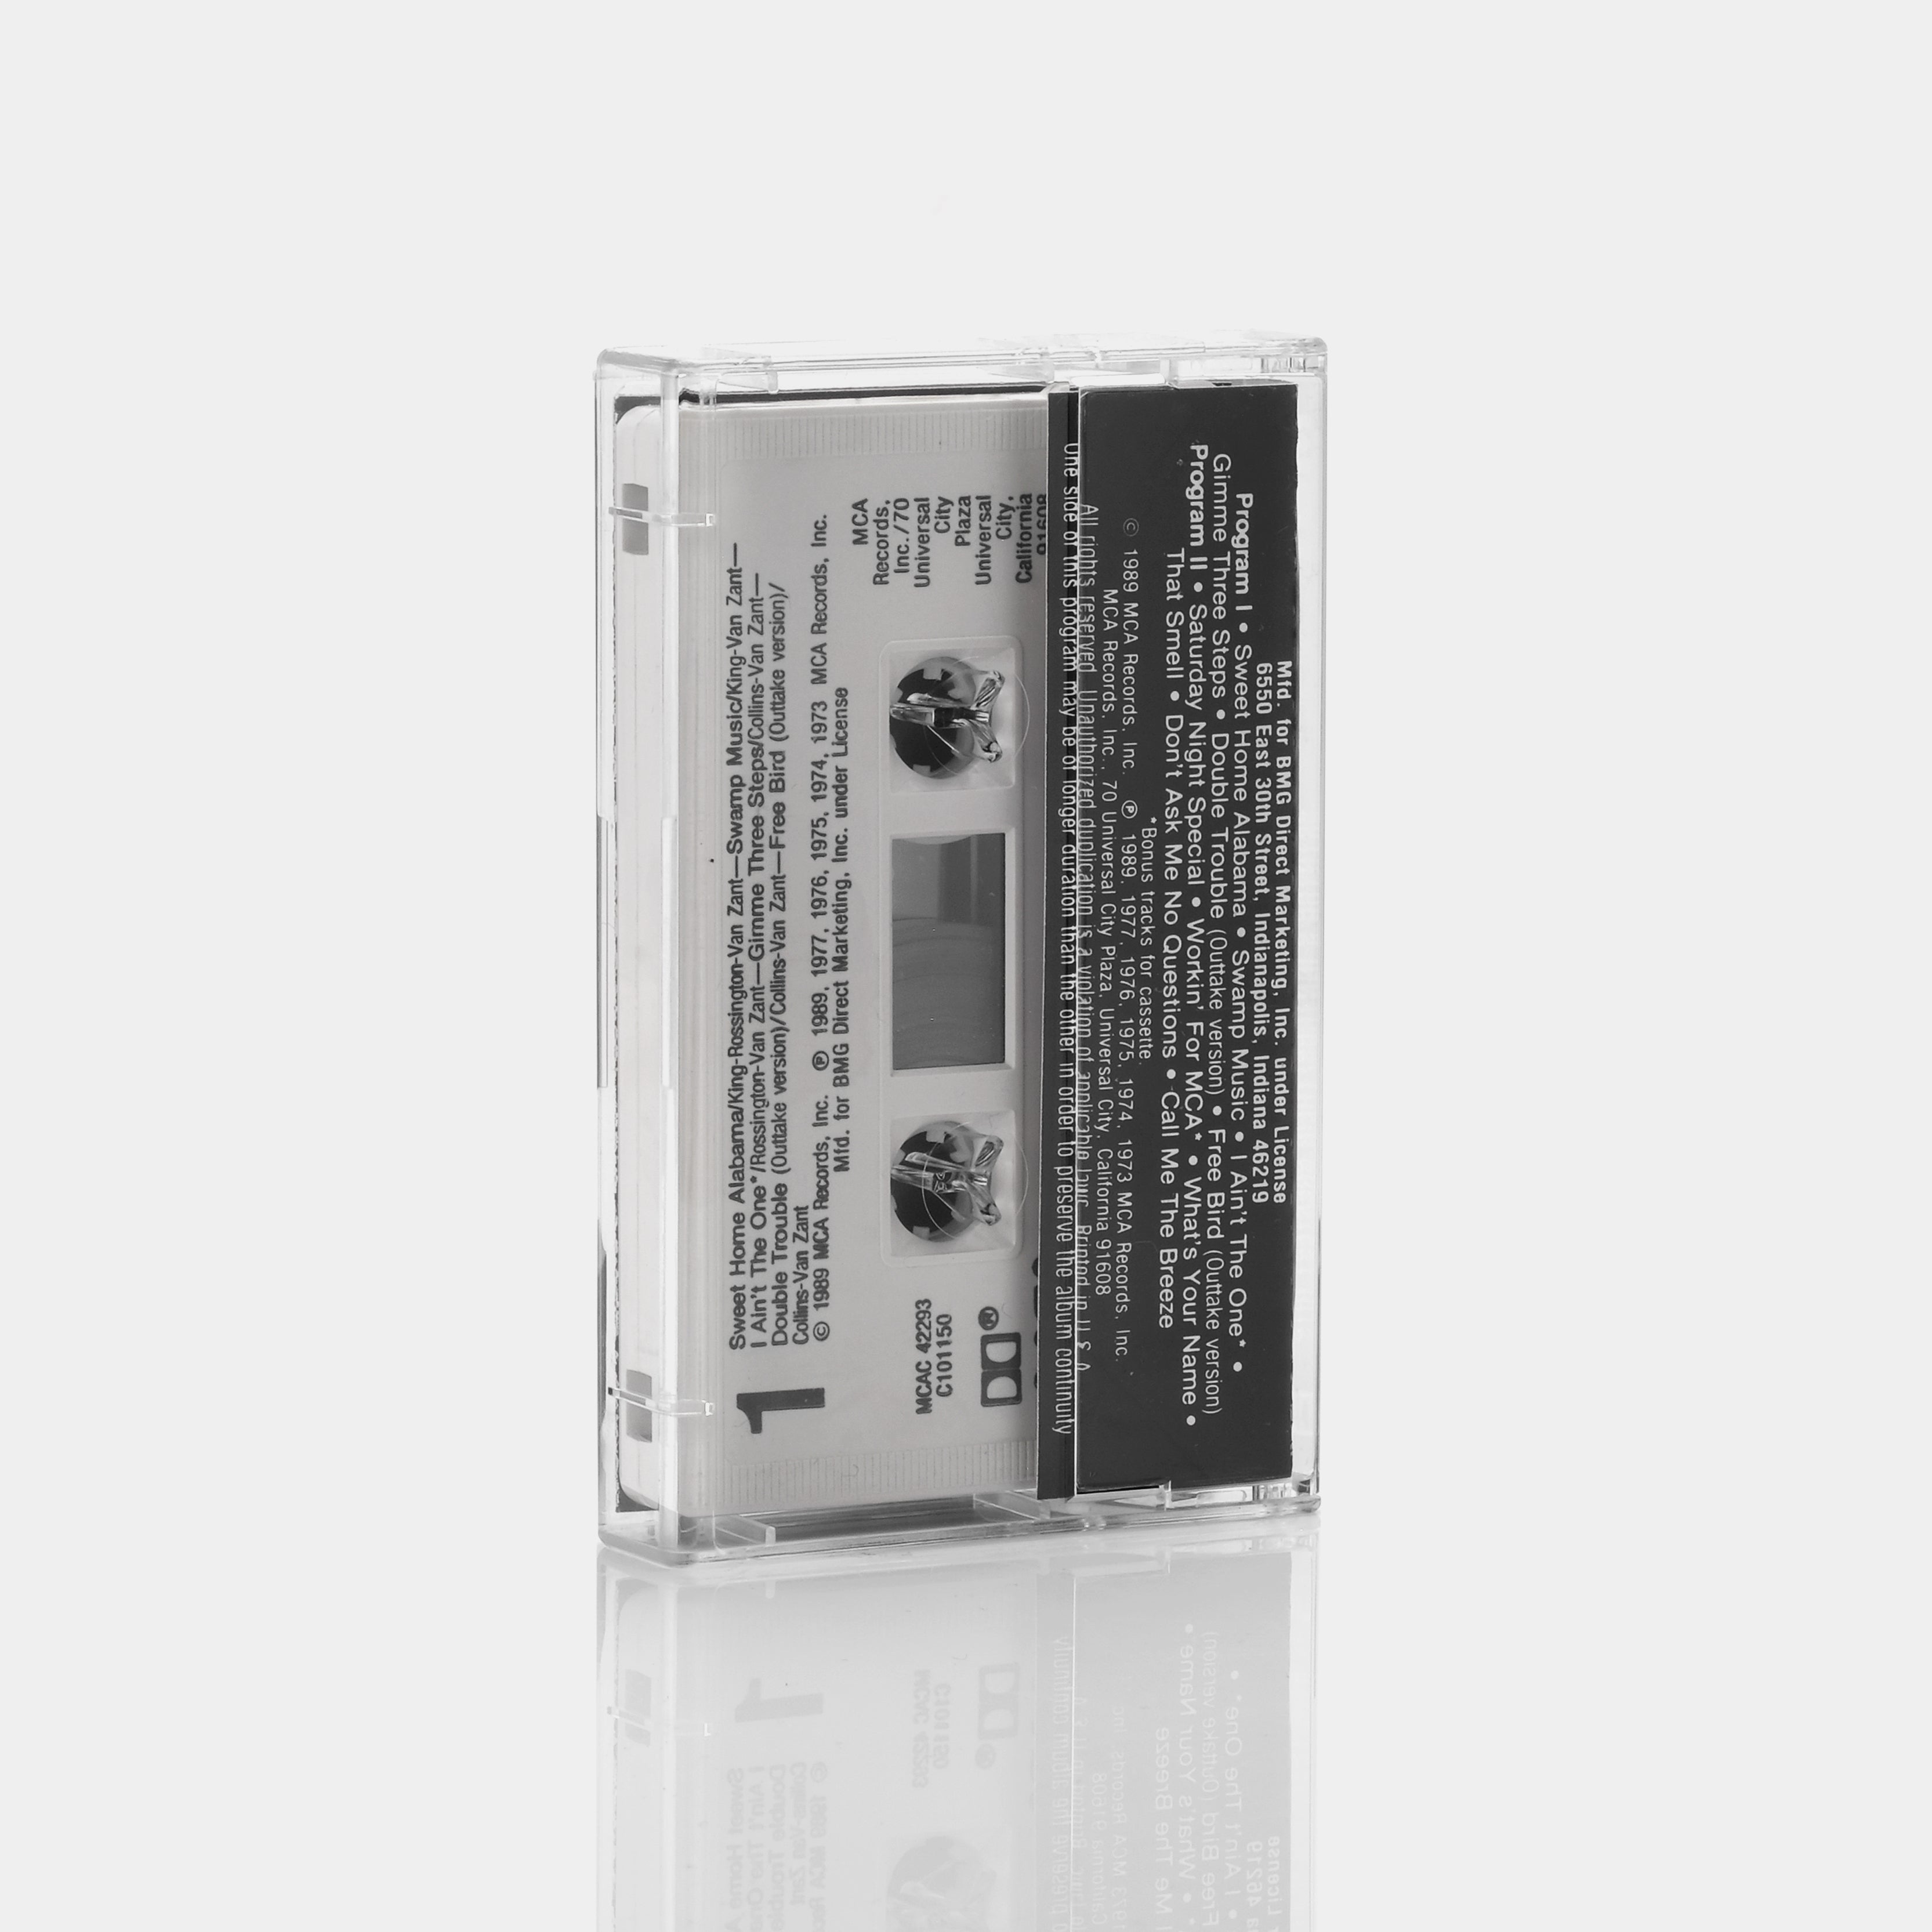 Lynyrd Skynyrd - Skynyrd Innyrds Greatest Hits Cassette Tape